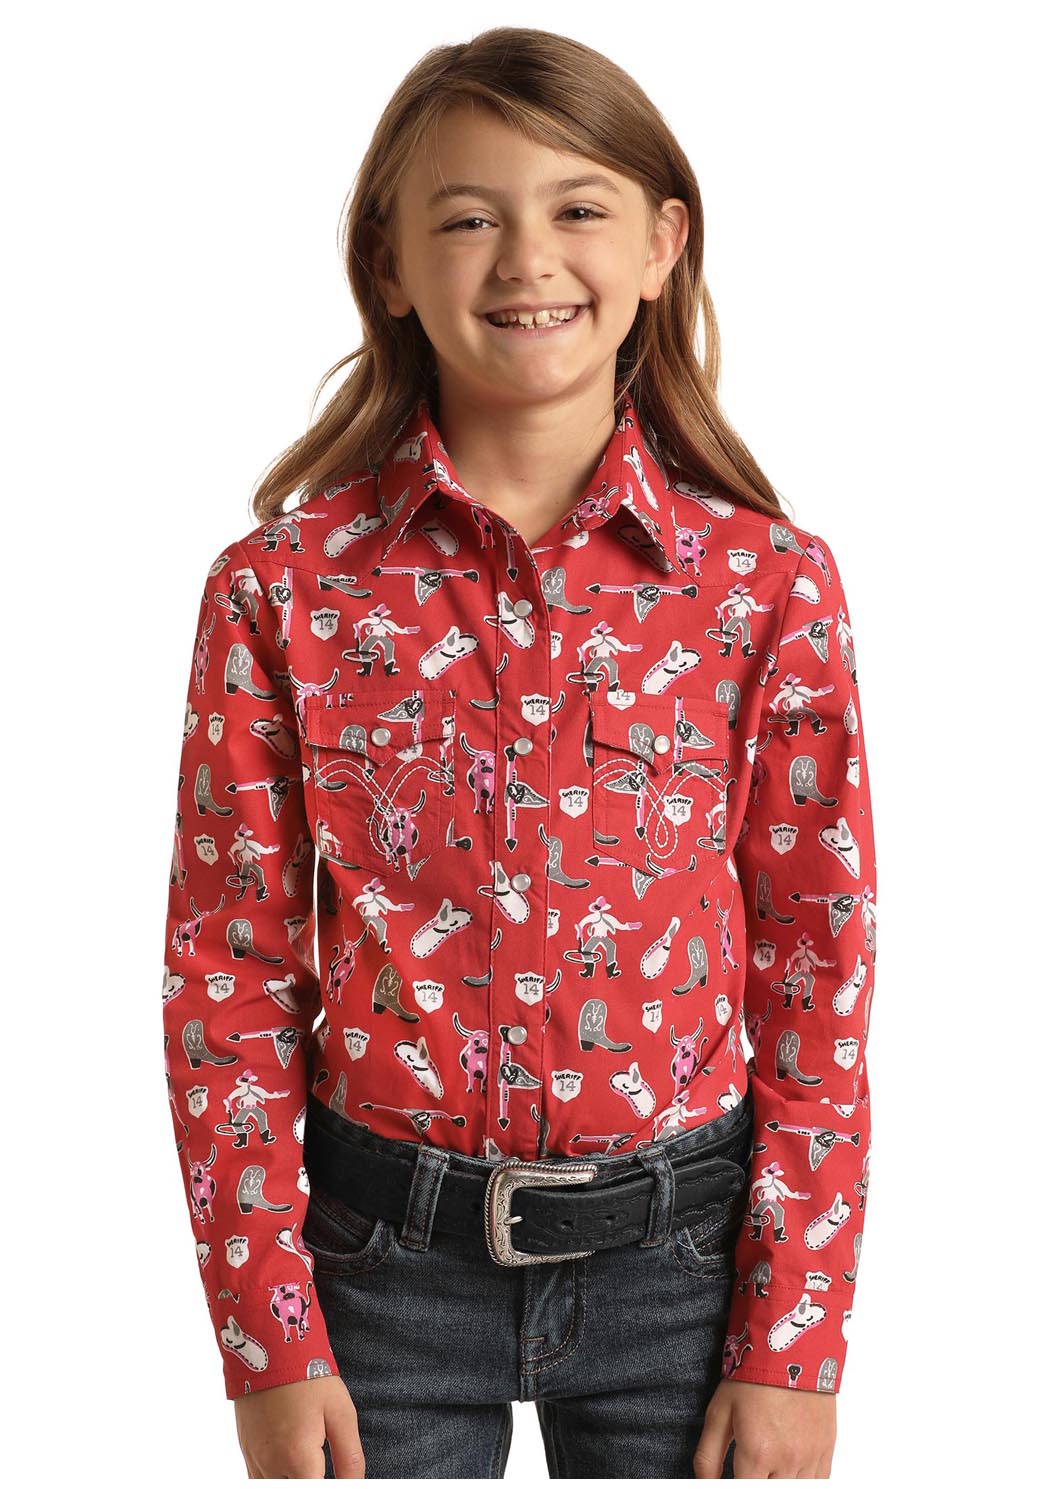 Panhandle Girl's Red Cowboy Design LS Pearl Snap Shirt